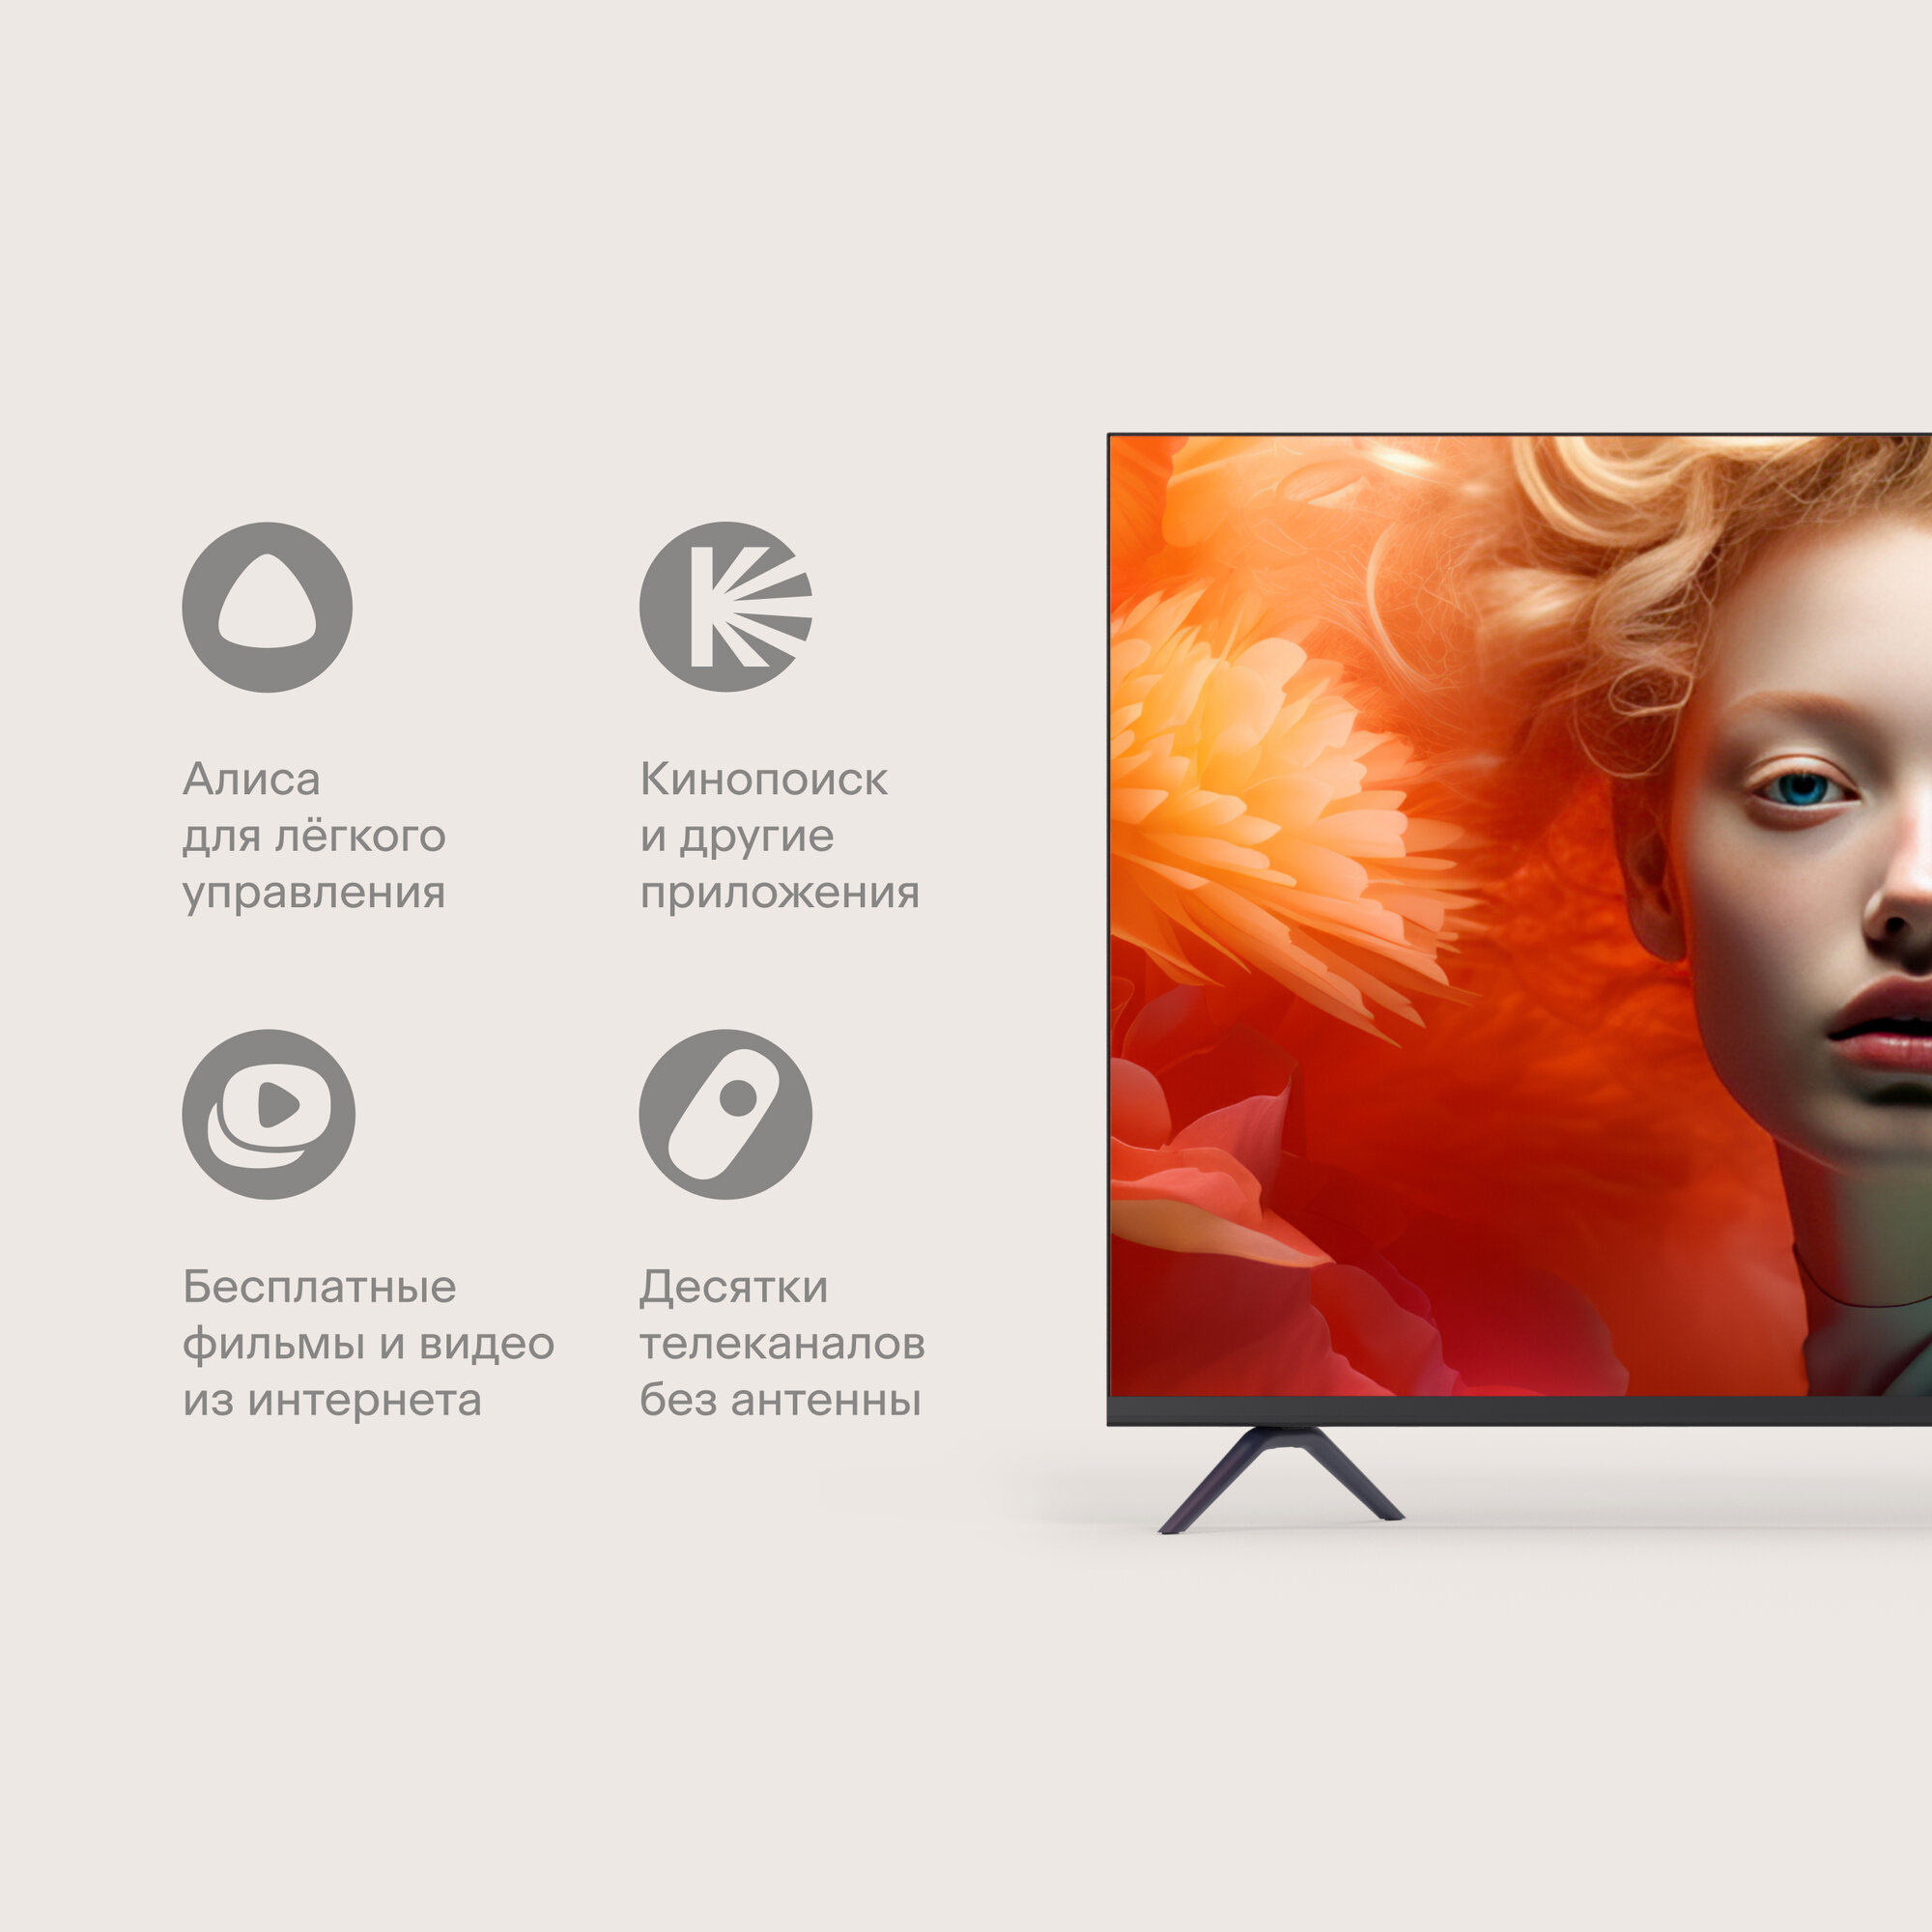 55” Телевизор Tuvio 4K ULTRA HD DLED Frameless на платформе Яндекс.ТВ, TD55UFBHV1, черный